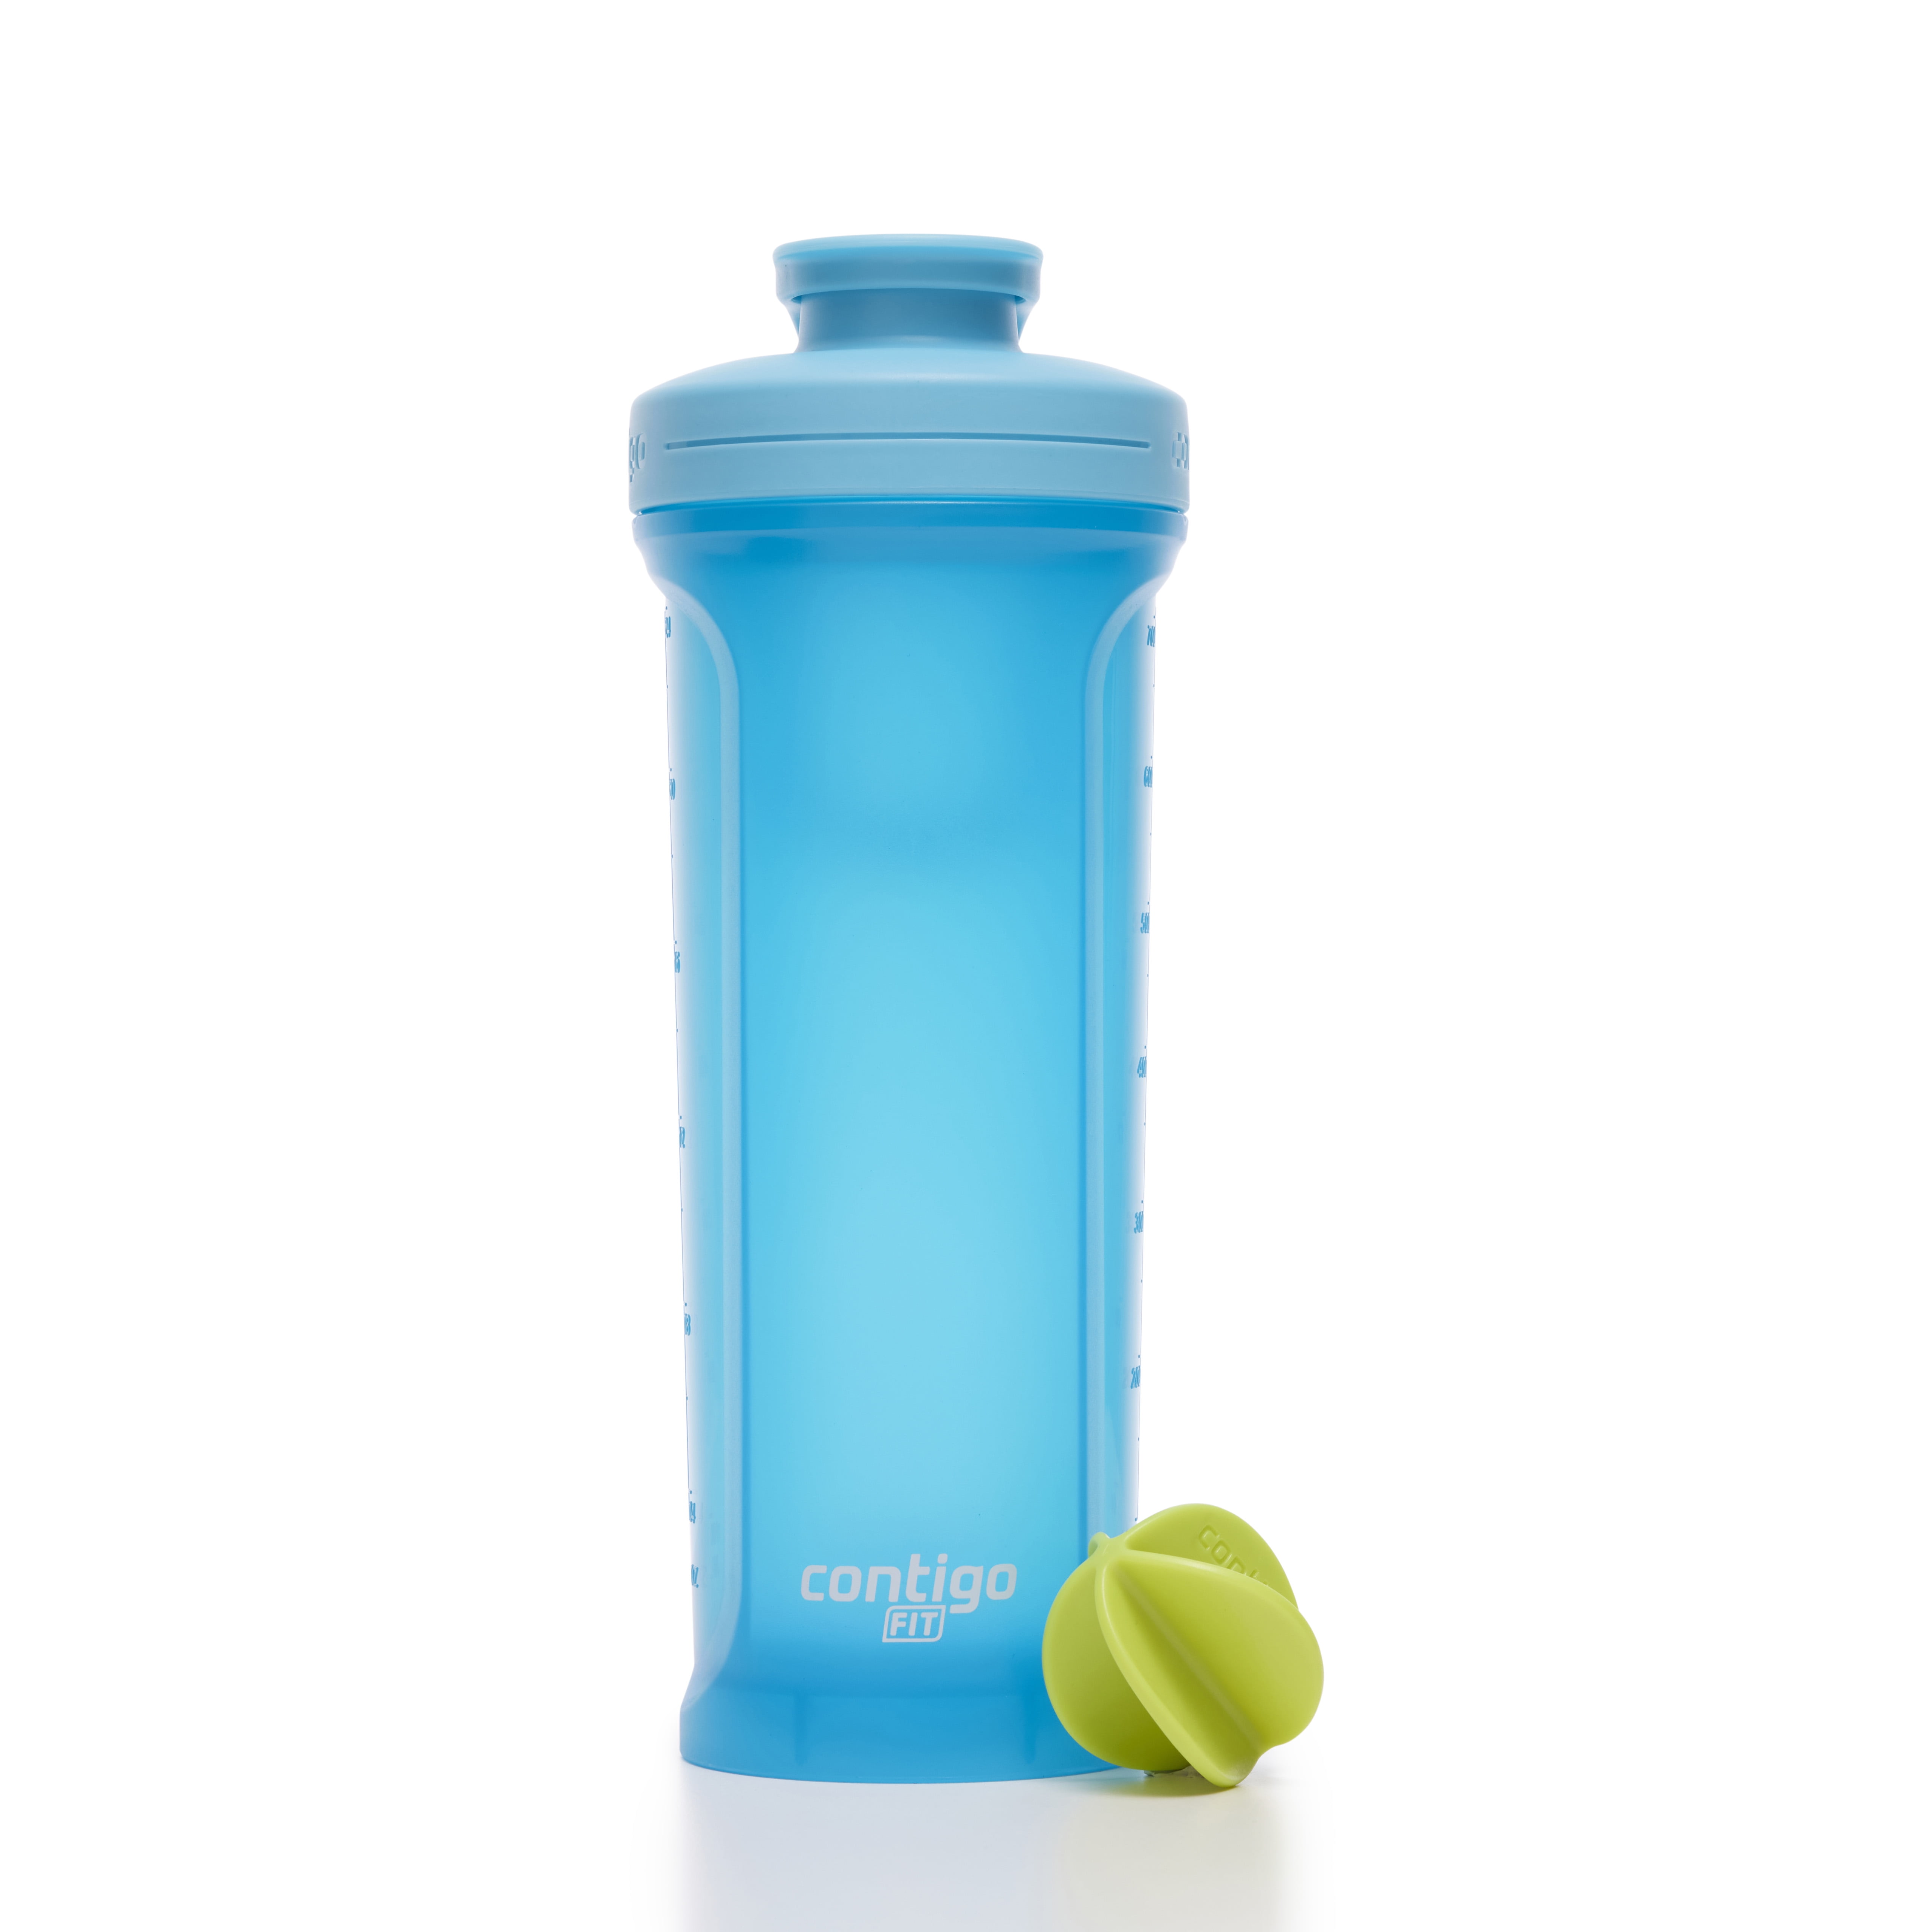  Stay-In-Bottle Reusable Silicone Straws for BlenderBottle  Shaker Bottles, Black and Blue (2 Pack): Home & Kitchen